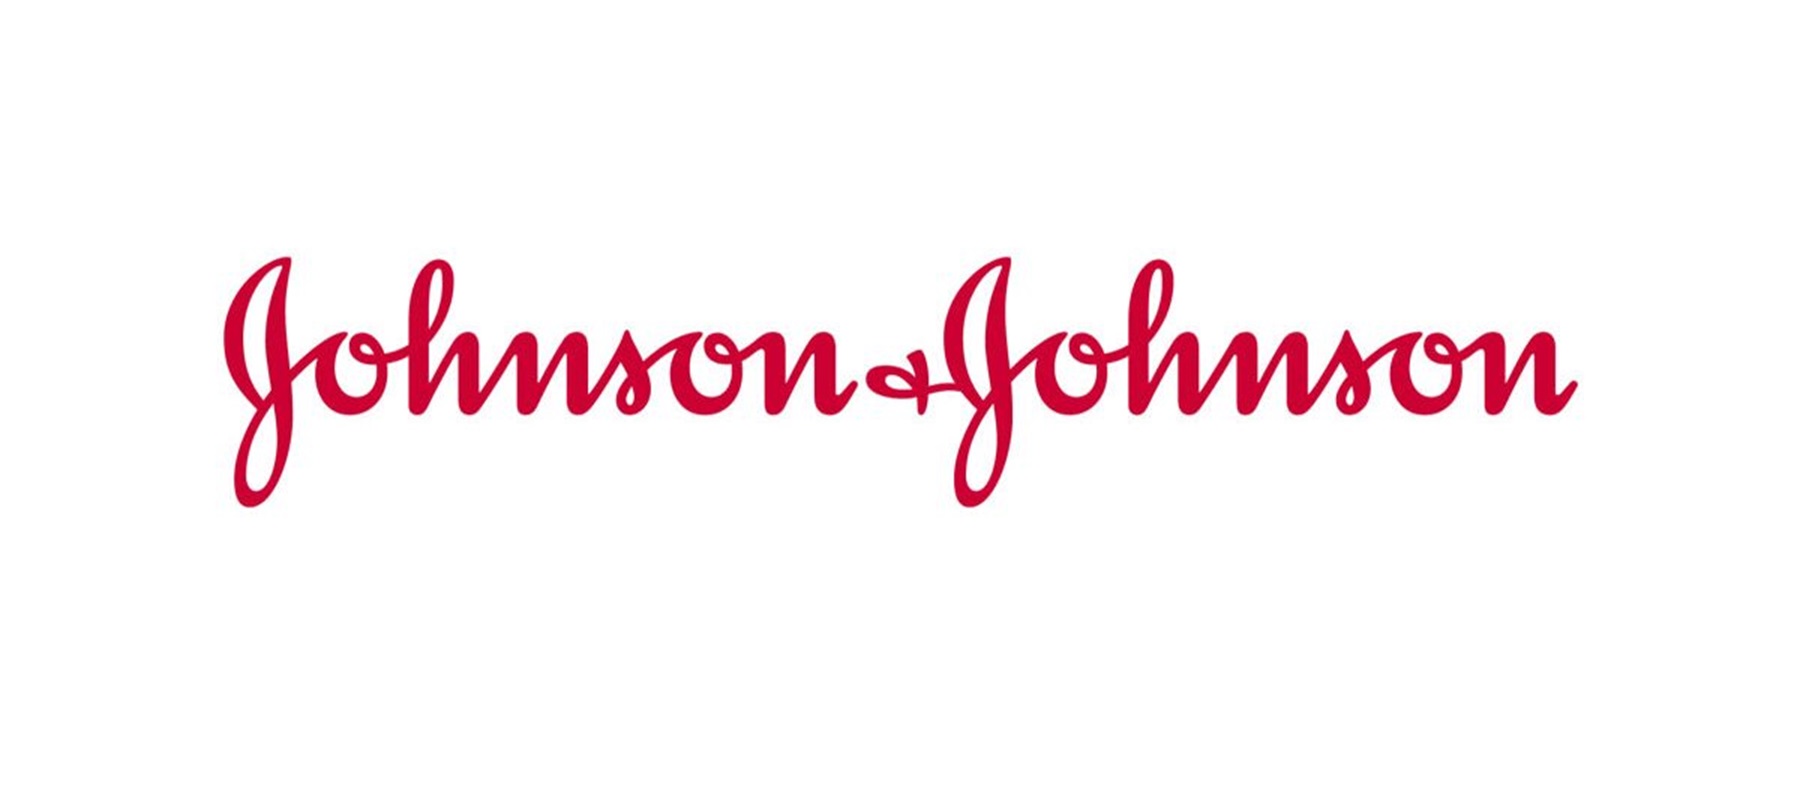 Johnson & Johnson is world's most valuable pharma brand, report